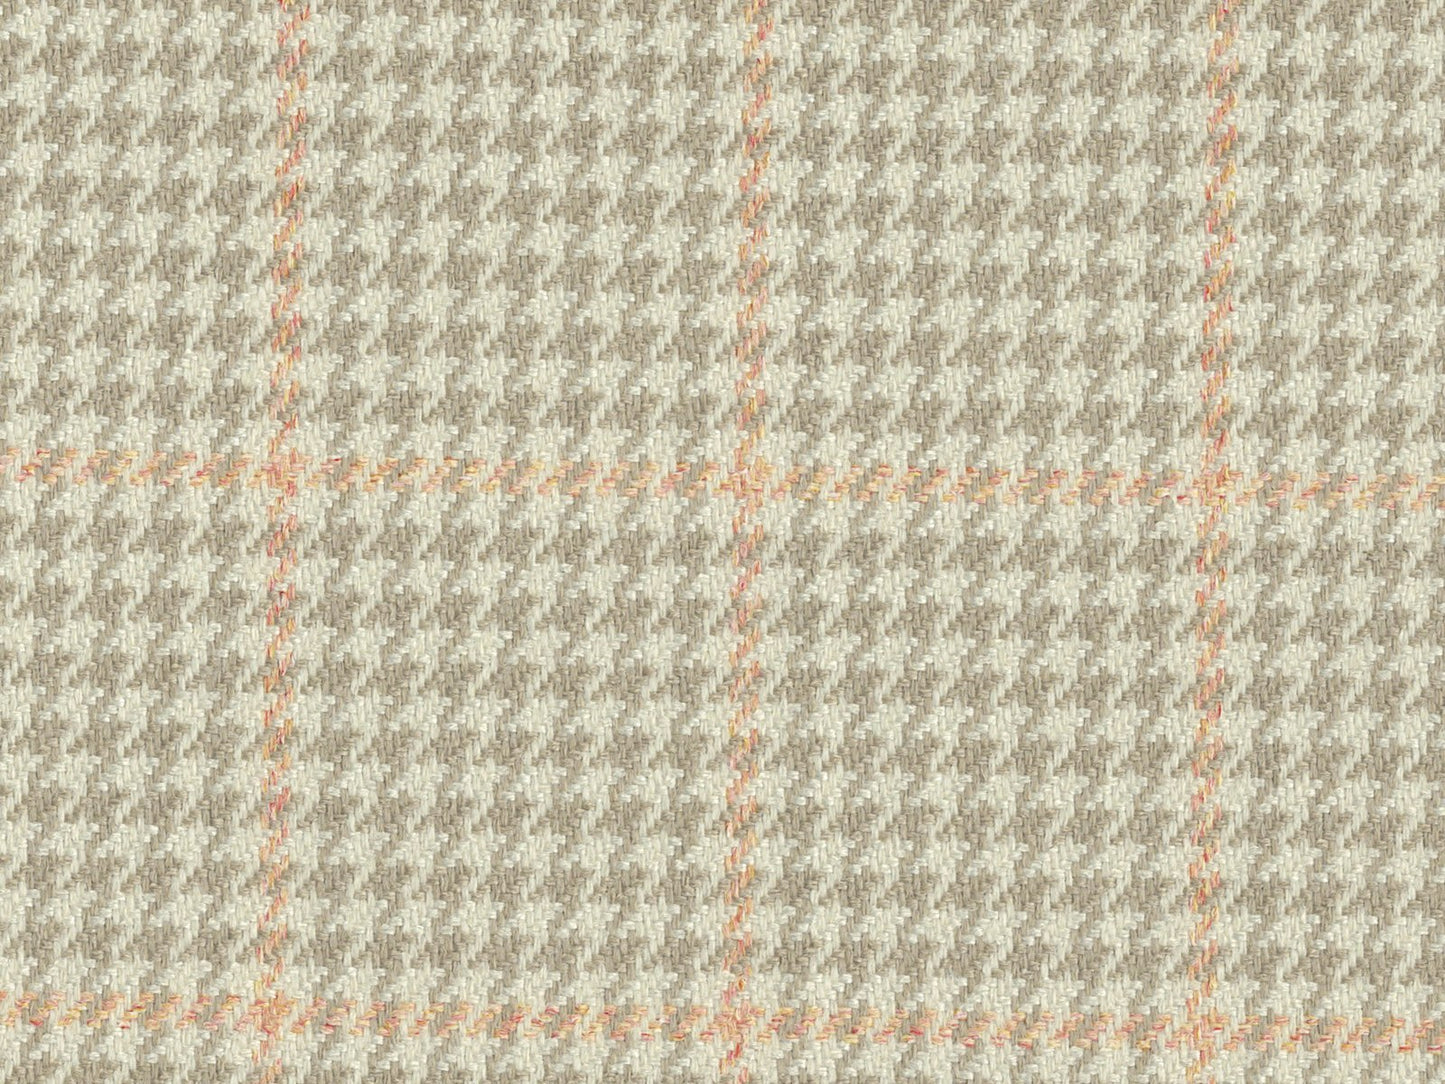 Bologna Fabric Samples - Rydan Interiors